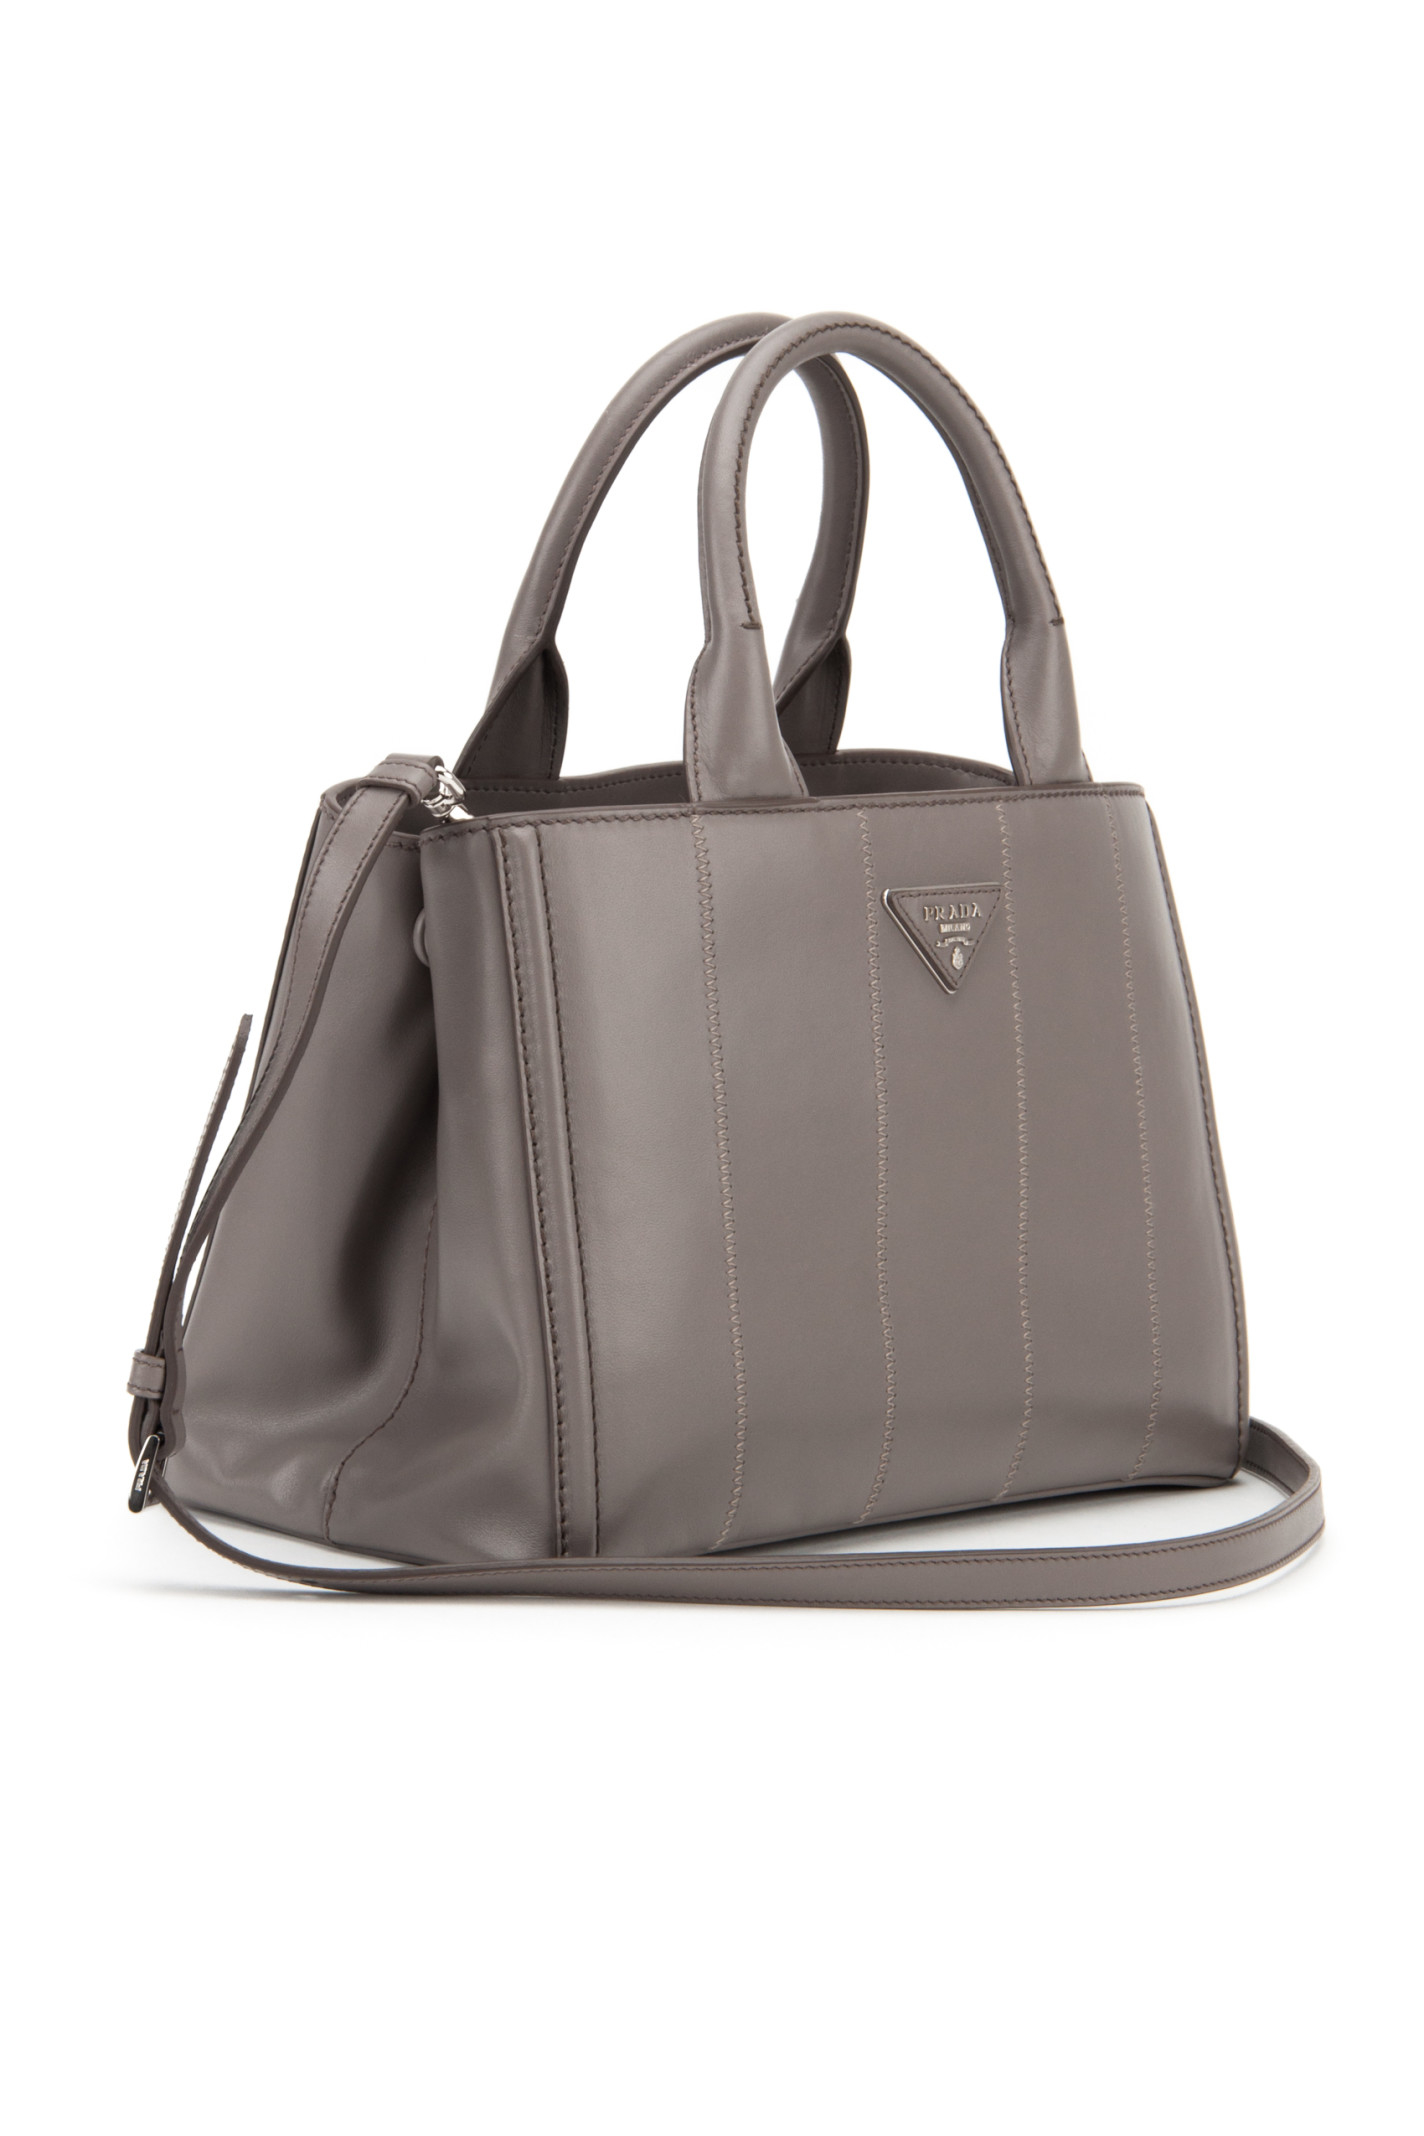 Prada Soft Calf Shopping Bag in Gray (ARGILLA) | Lyst  